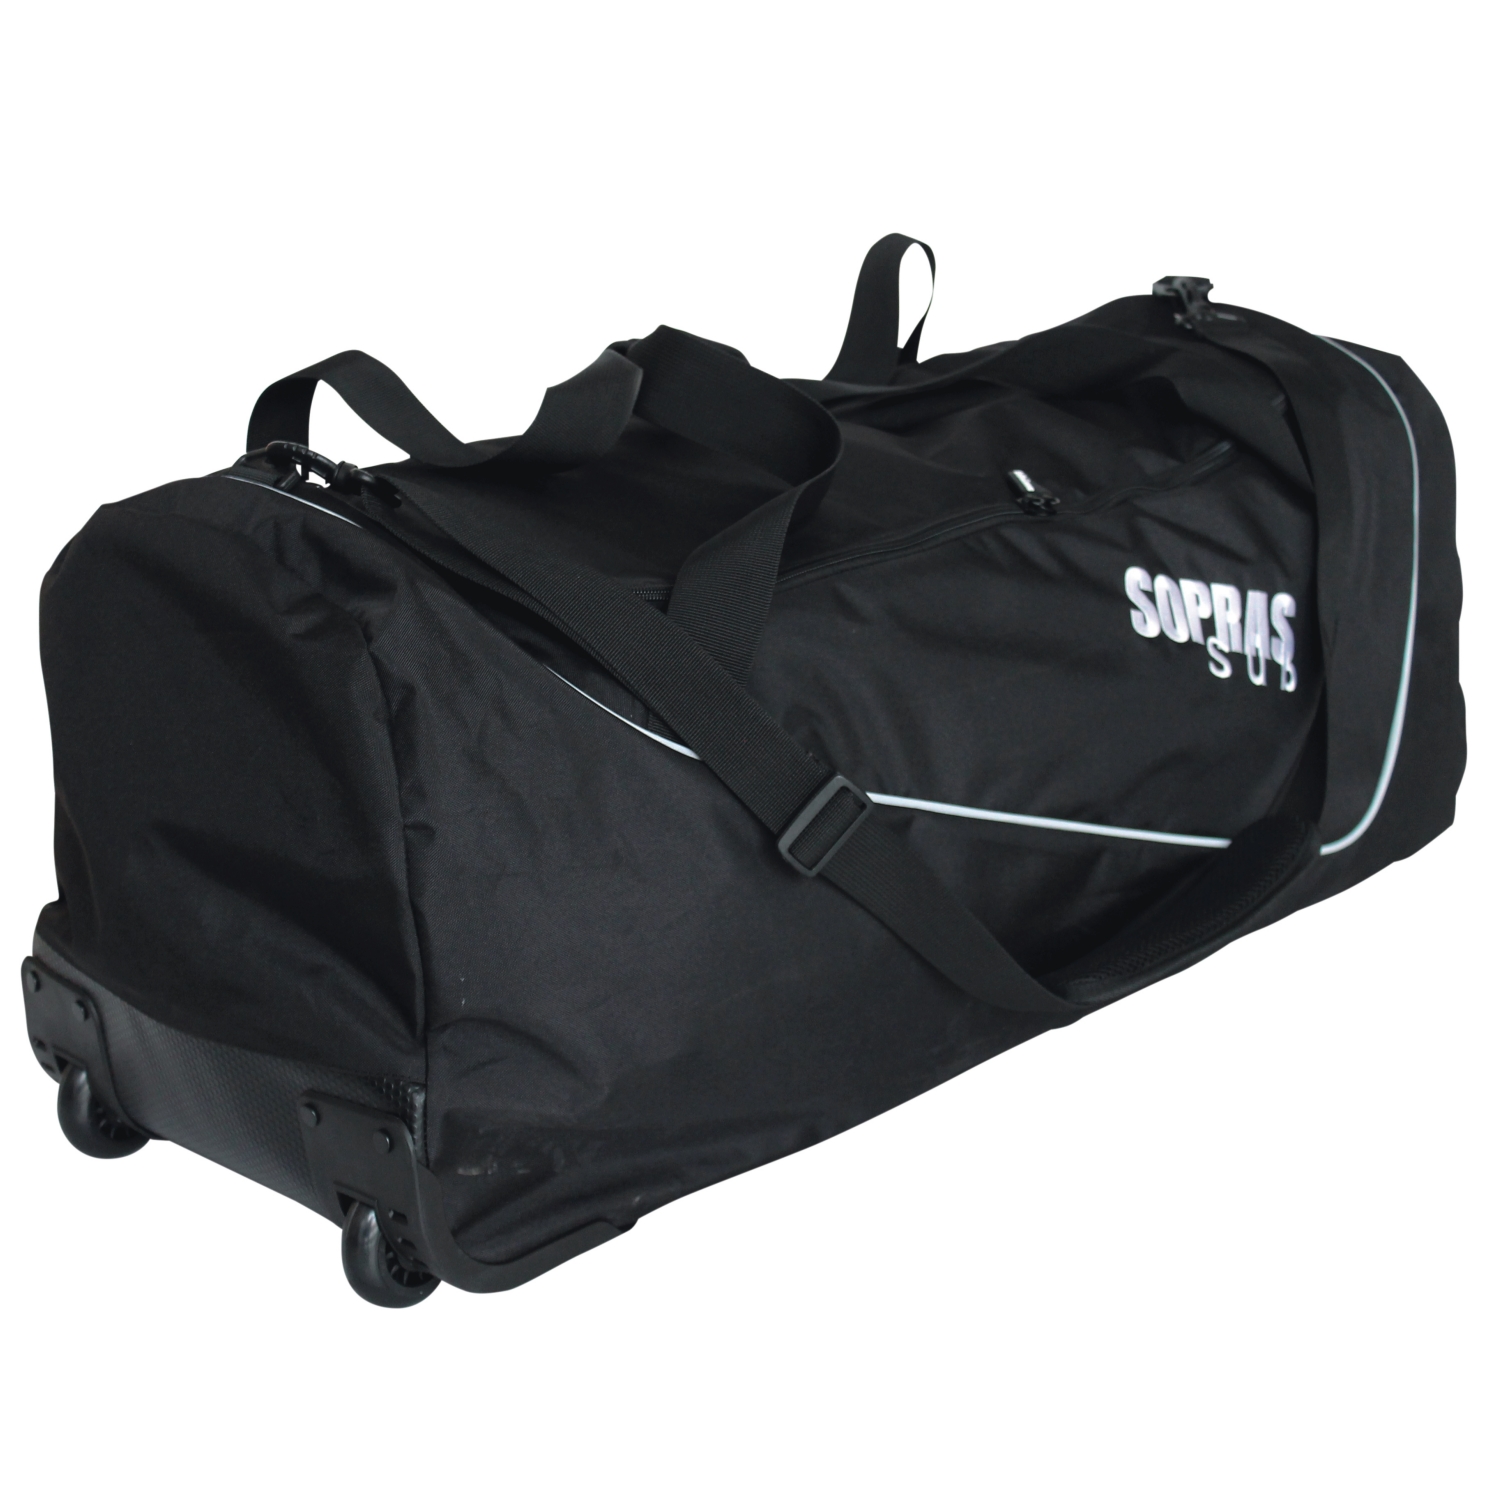 Sopras Sub Trolley Travel Rolling Gear Bag w detachable front back pack Scuba... 